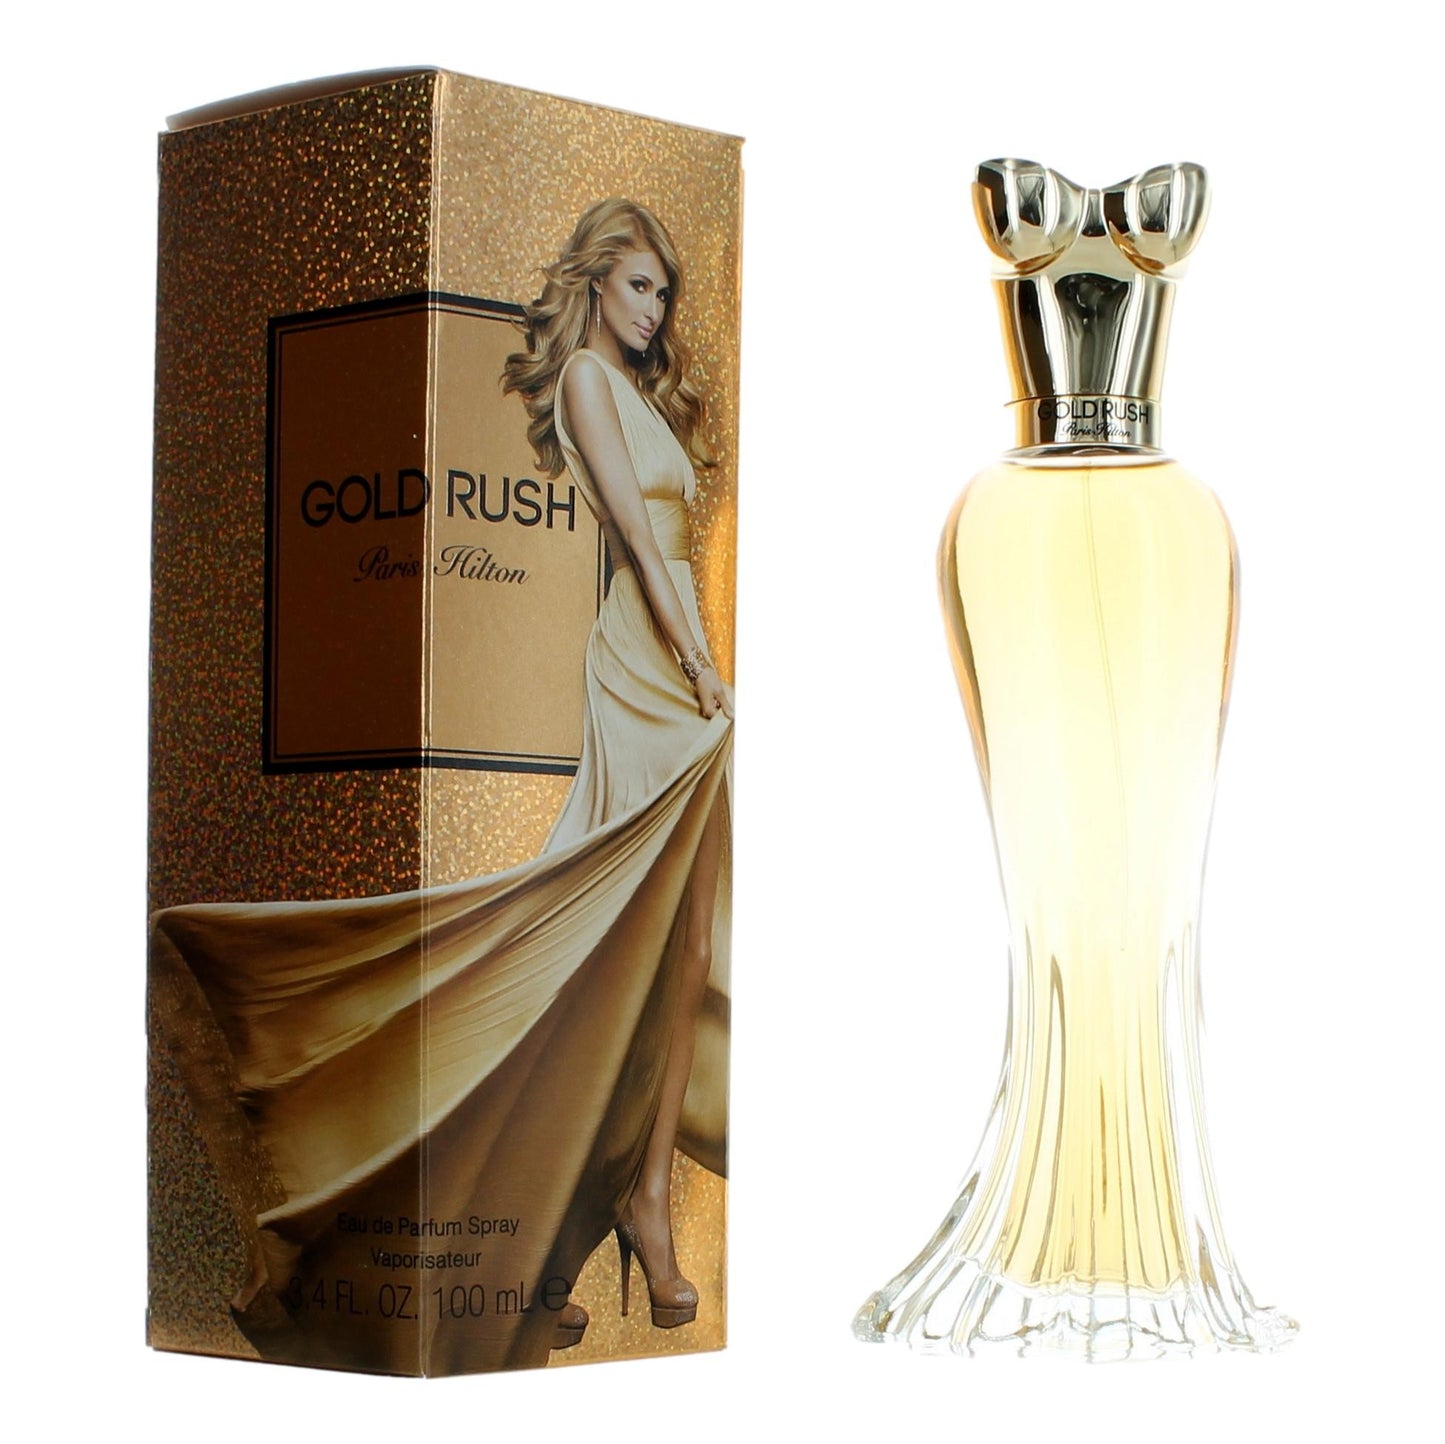 Gold Rush by Paris Hilton